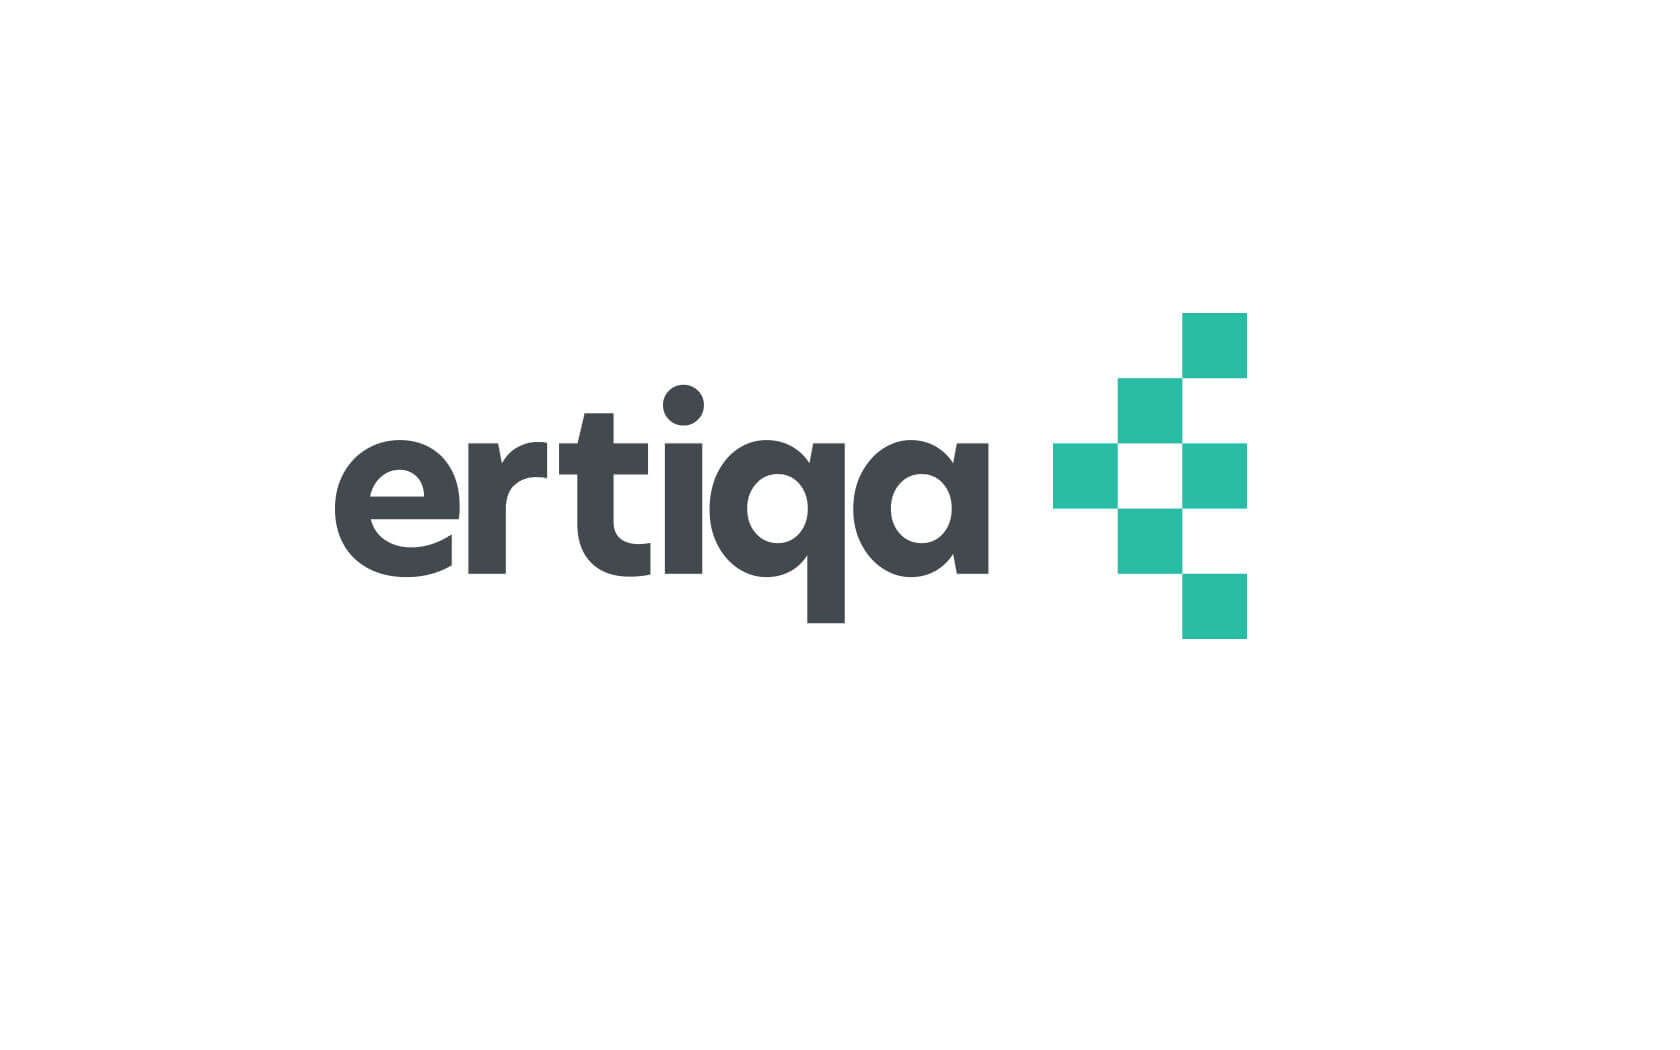 Ertiqa. Brand logo on white background